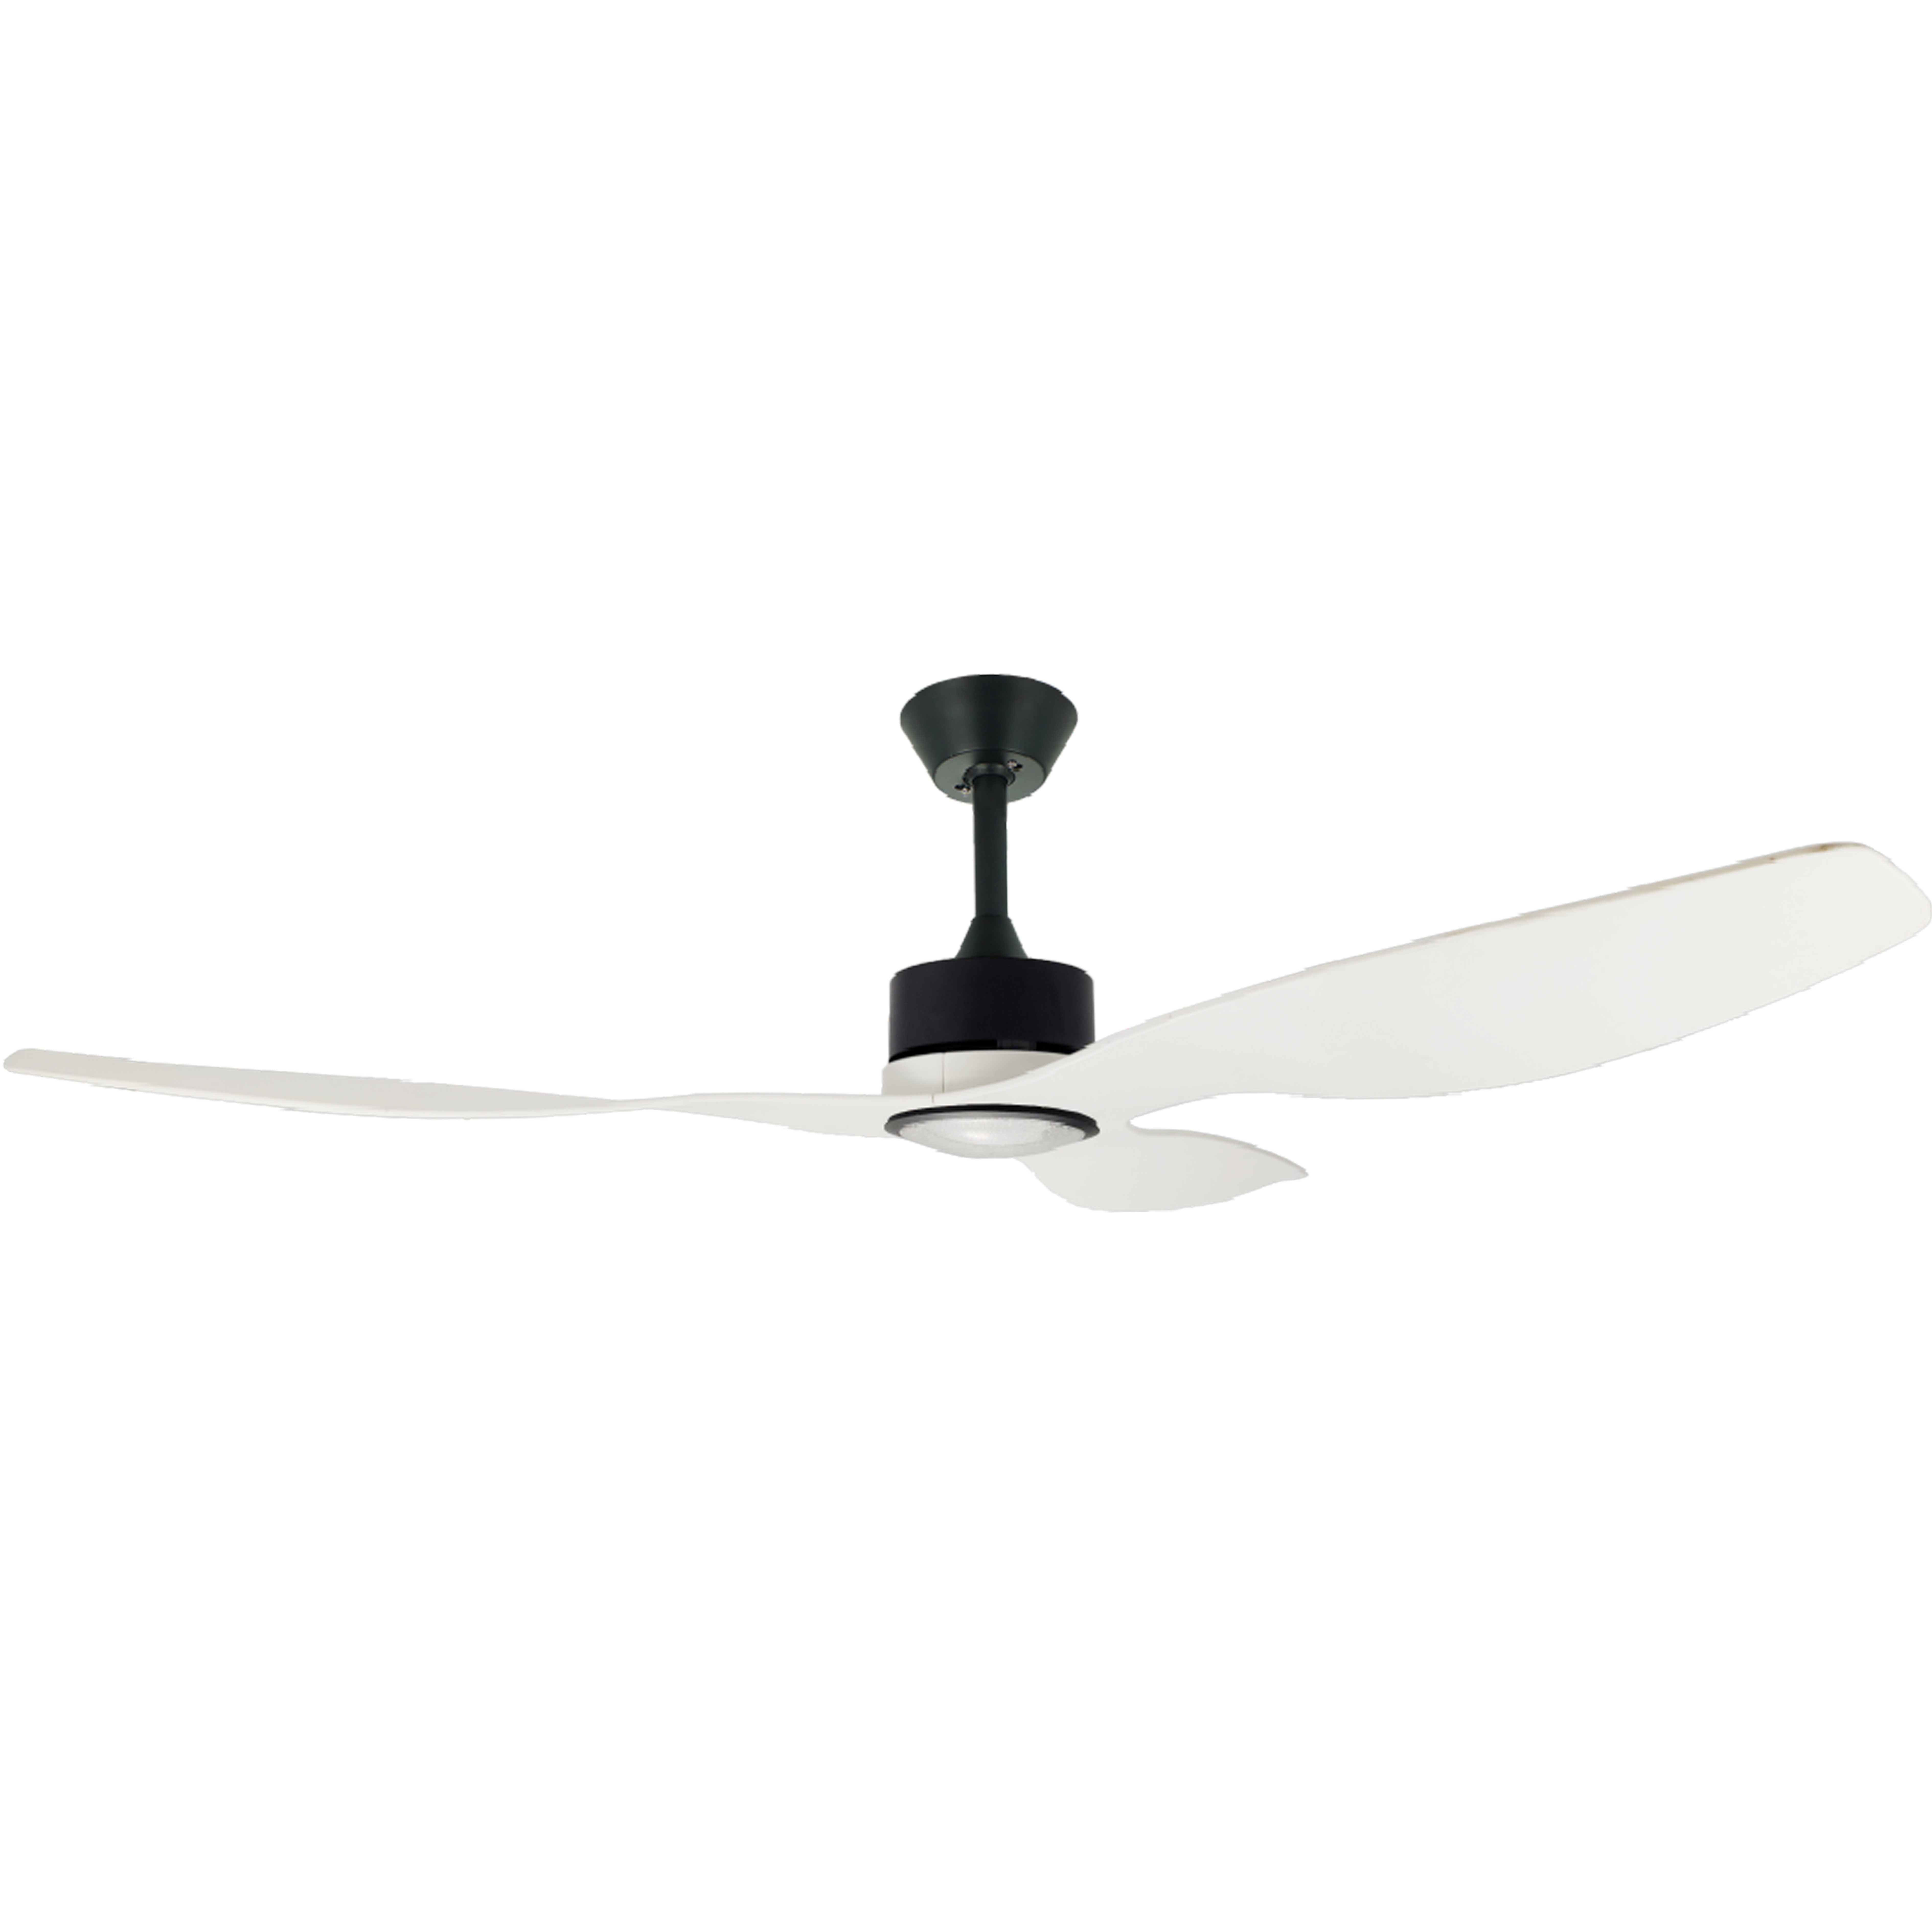 Ceiling Fan ABS Plastic Blade LED Black Large Ceiling Fans